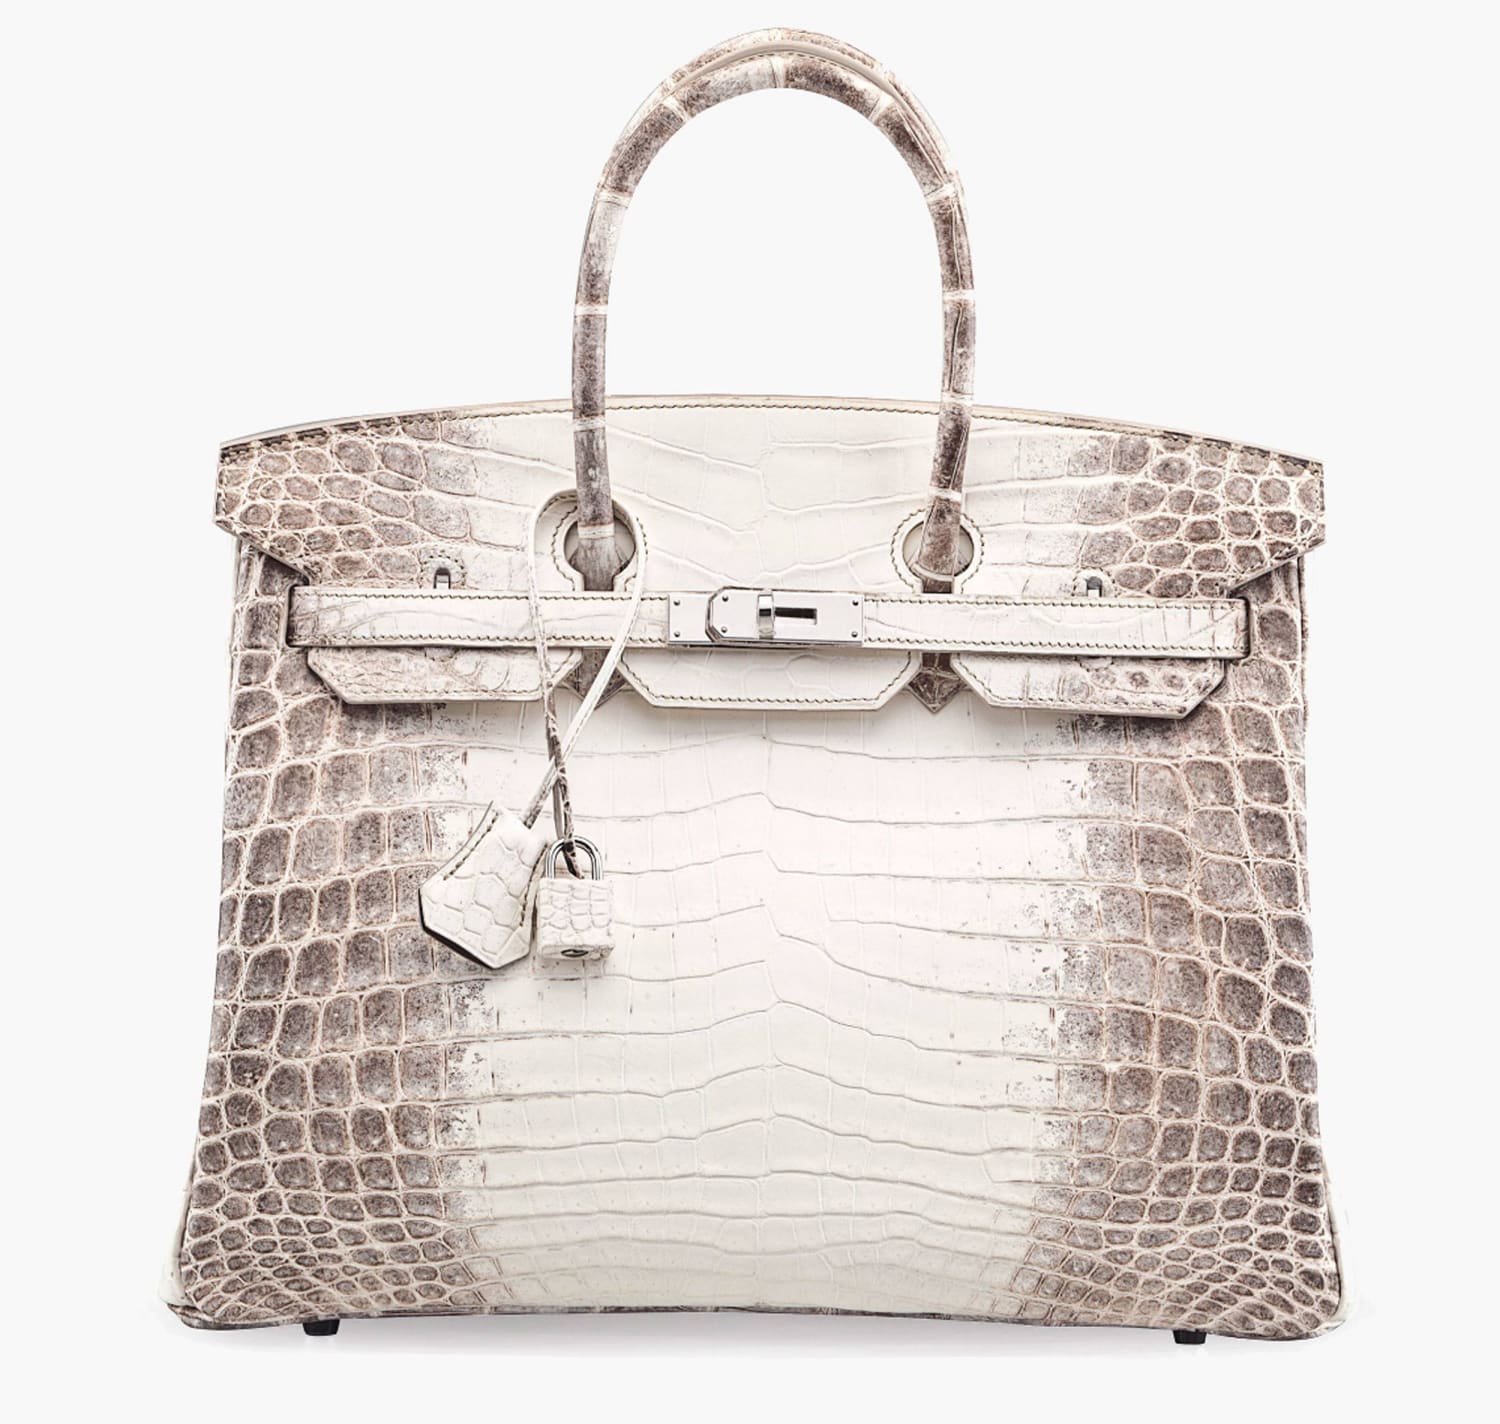 This $300,000 Hermès Birkin Is the Most Expensive Handbag Ever